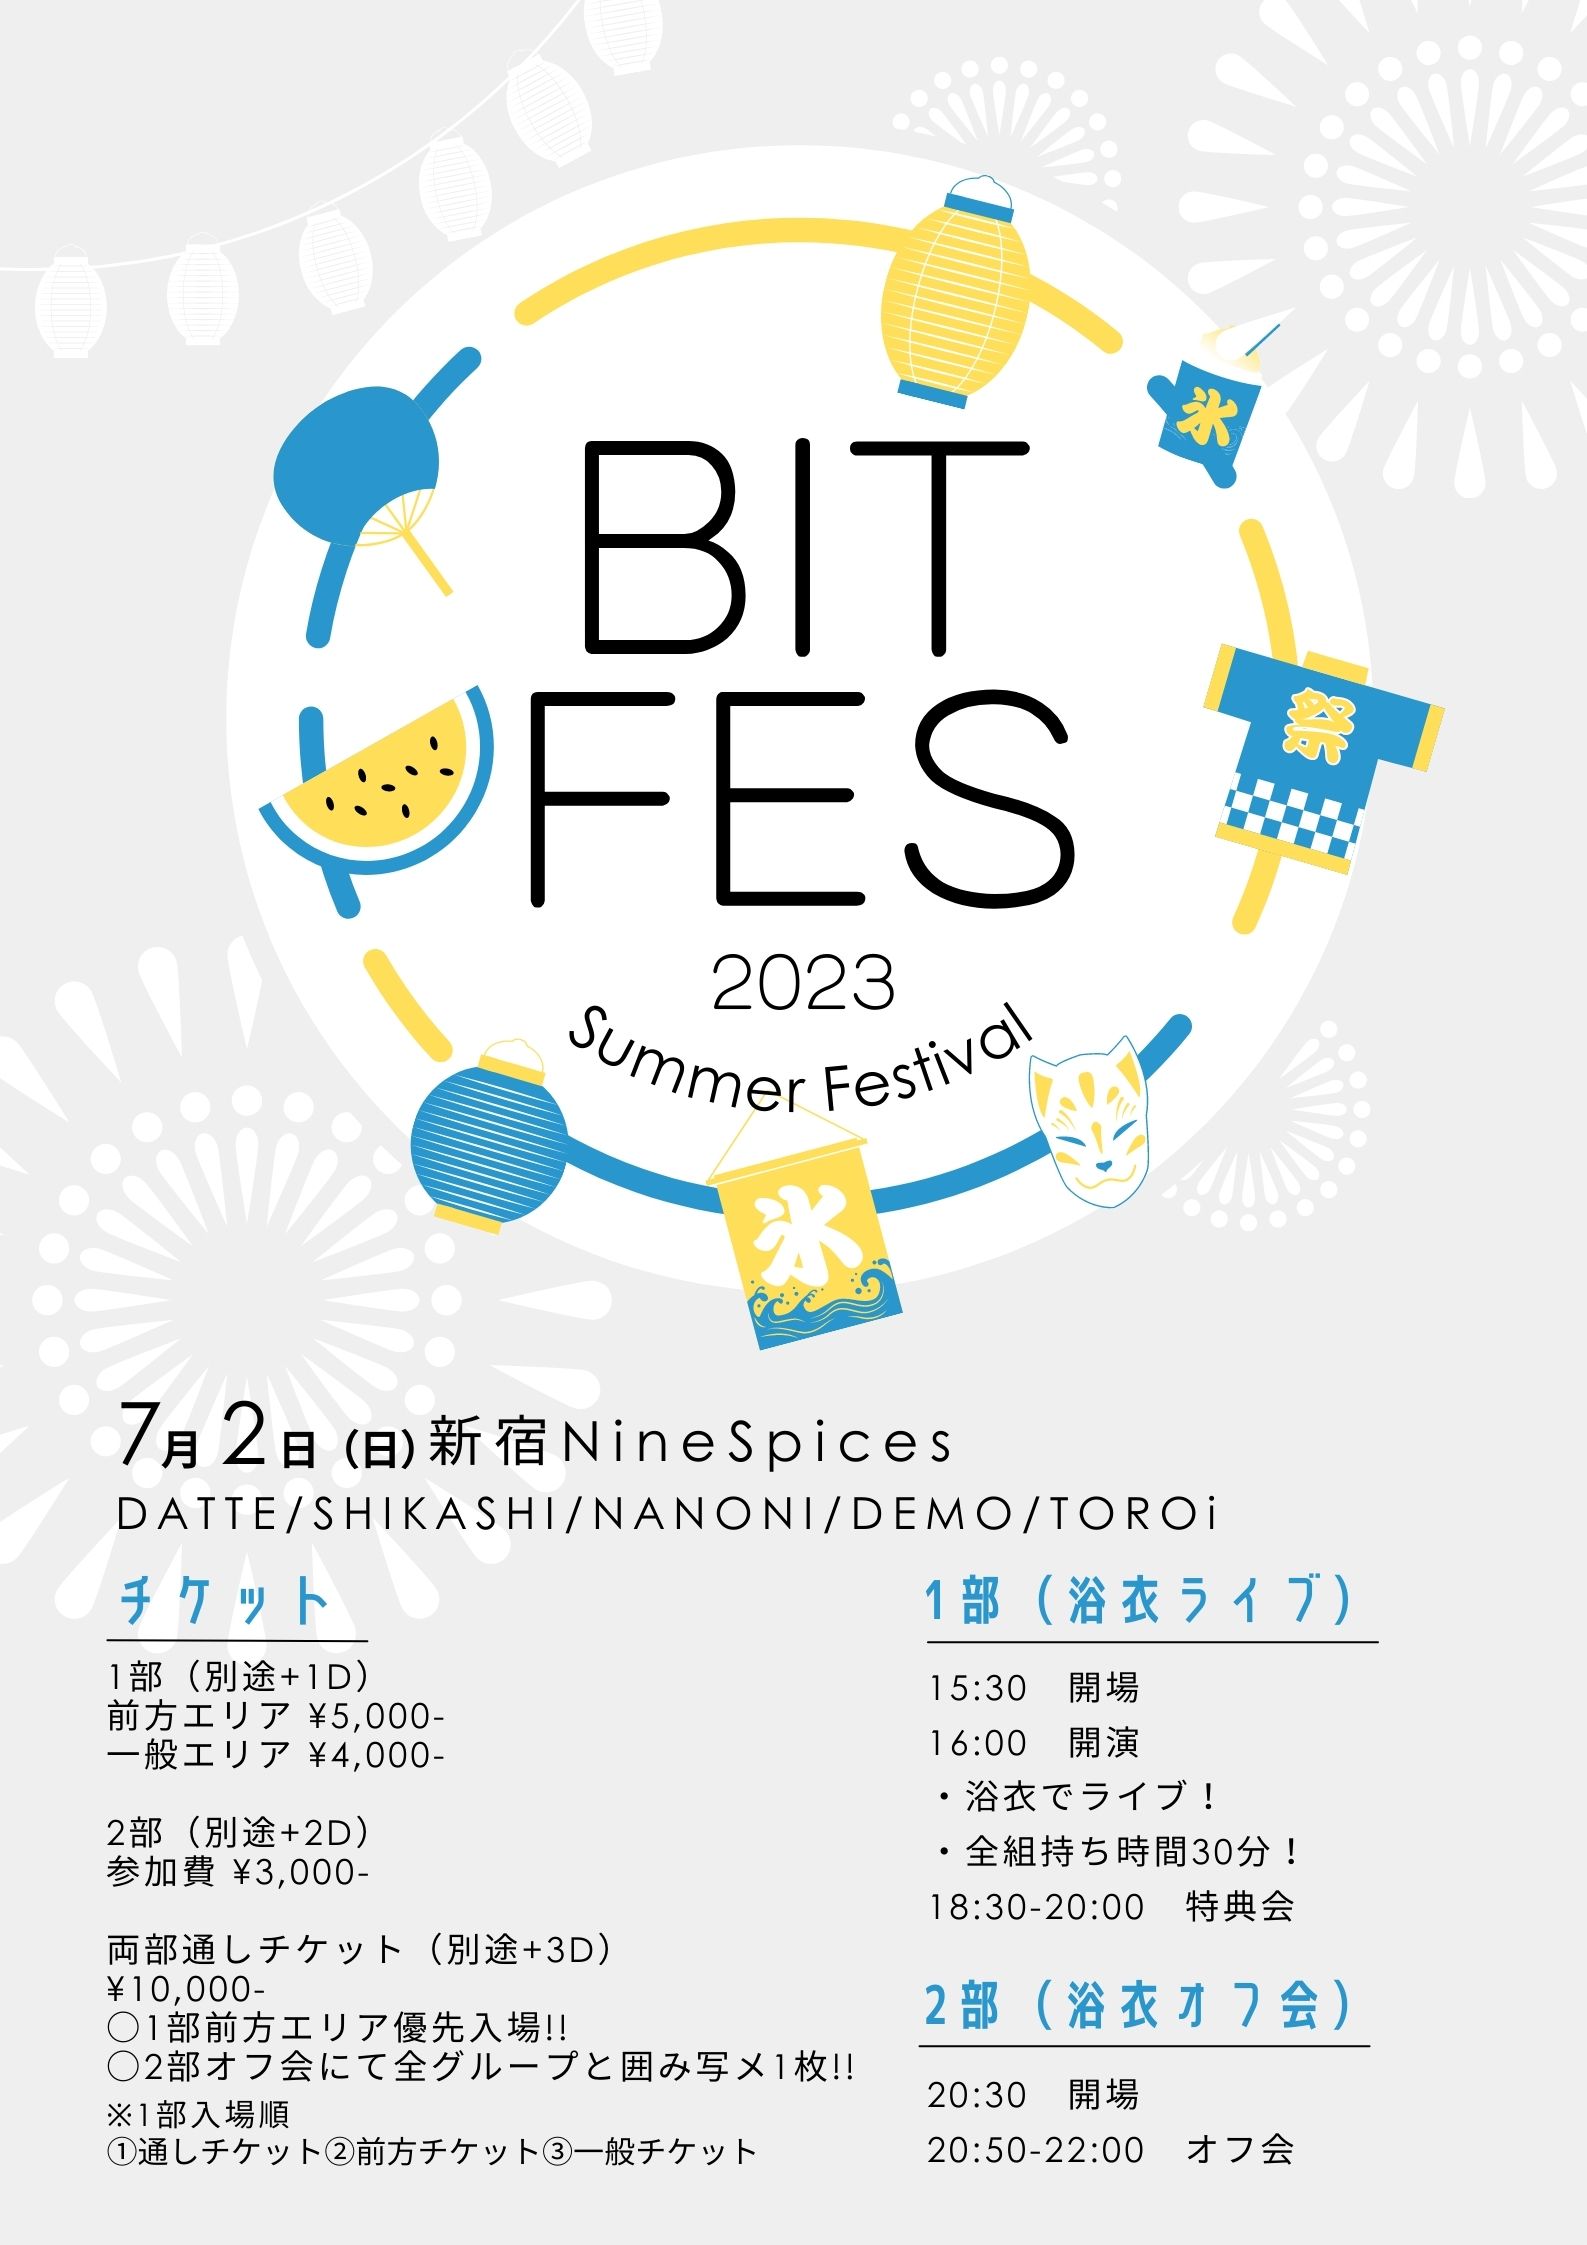 BIT FES 2023 ~Summer Festival~【両部通しチケット】